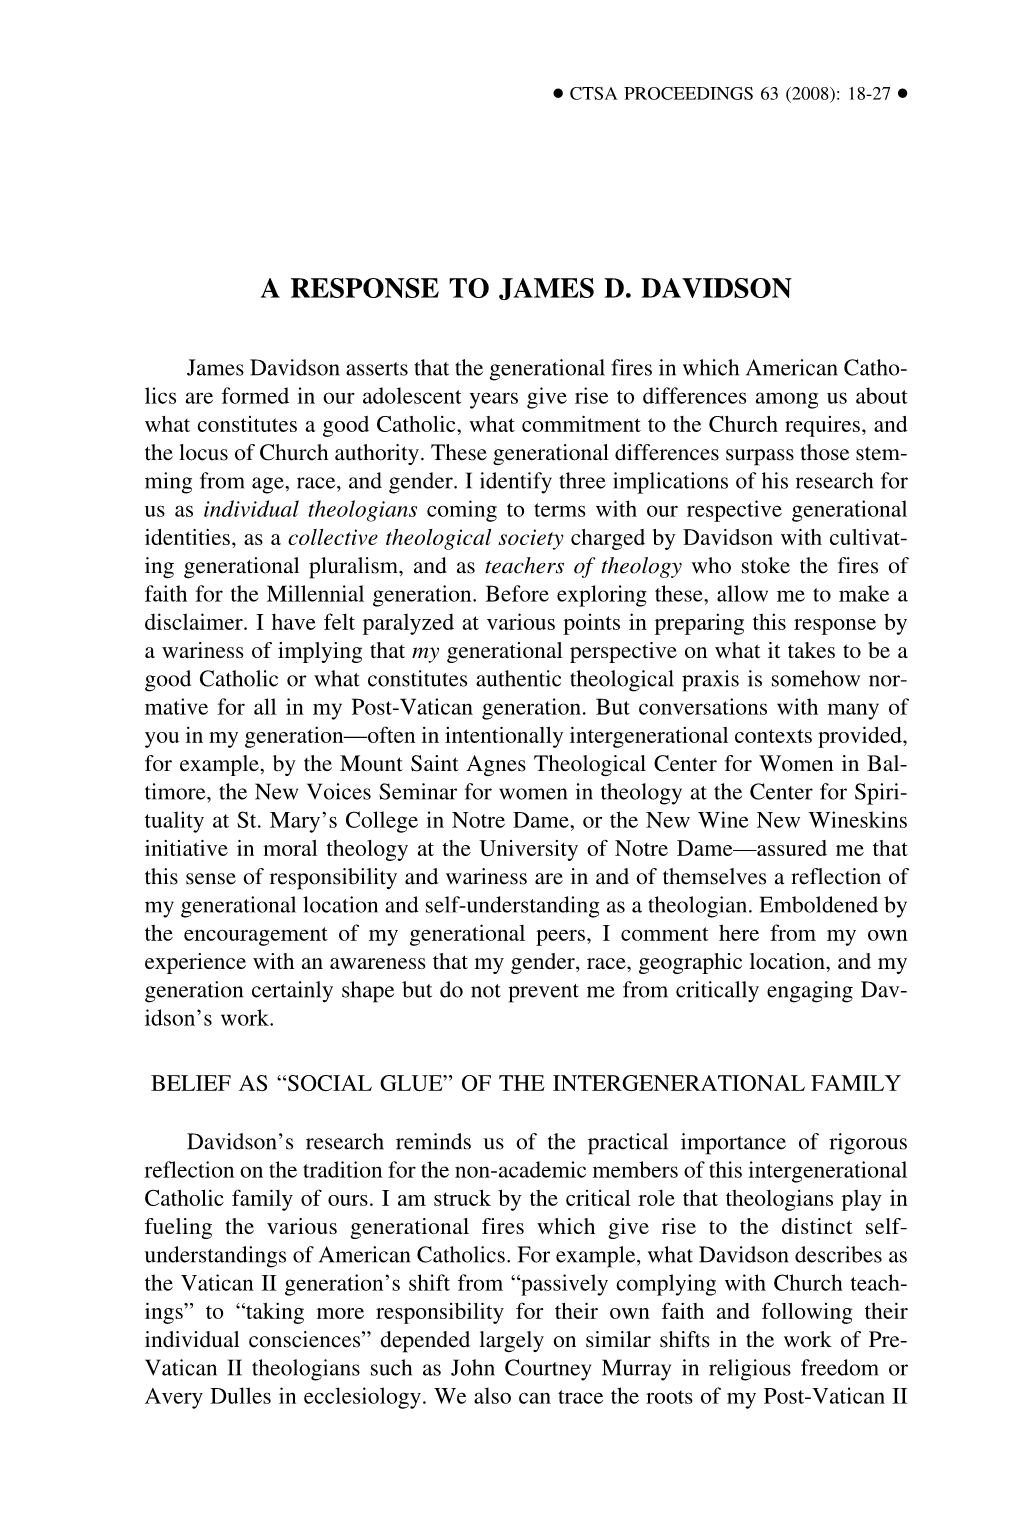 A Response to James D. Davidson